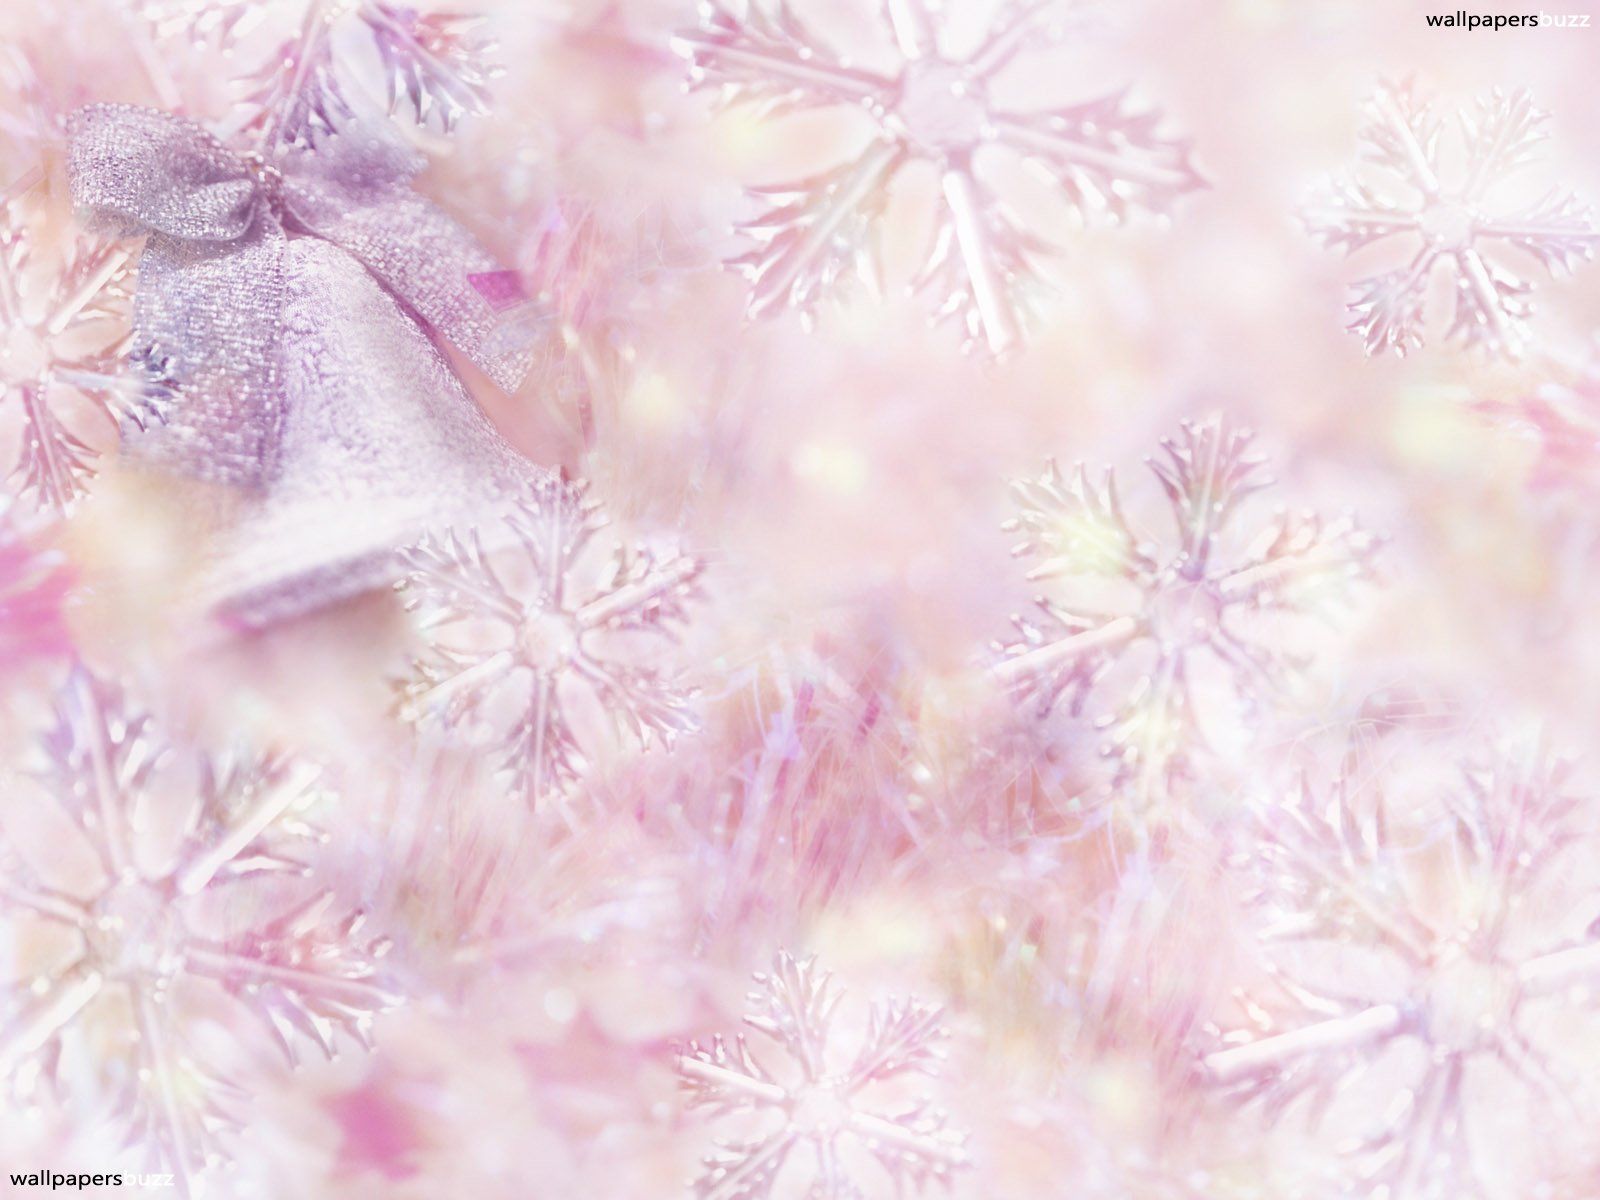 Pink Christmas Wallpaper by Hyder Guilliland, GOLDWALL